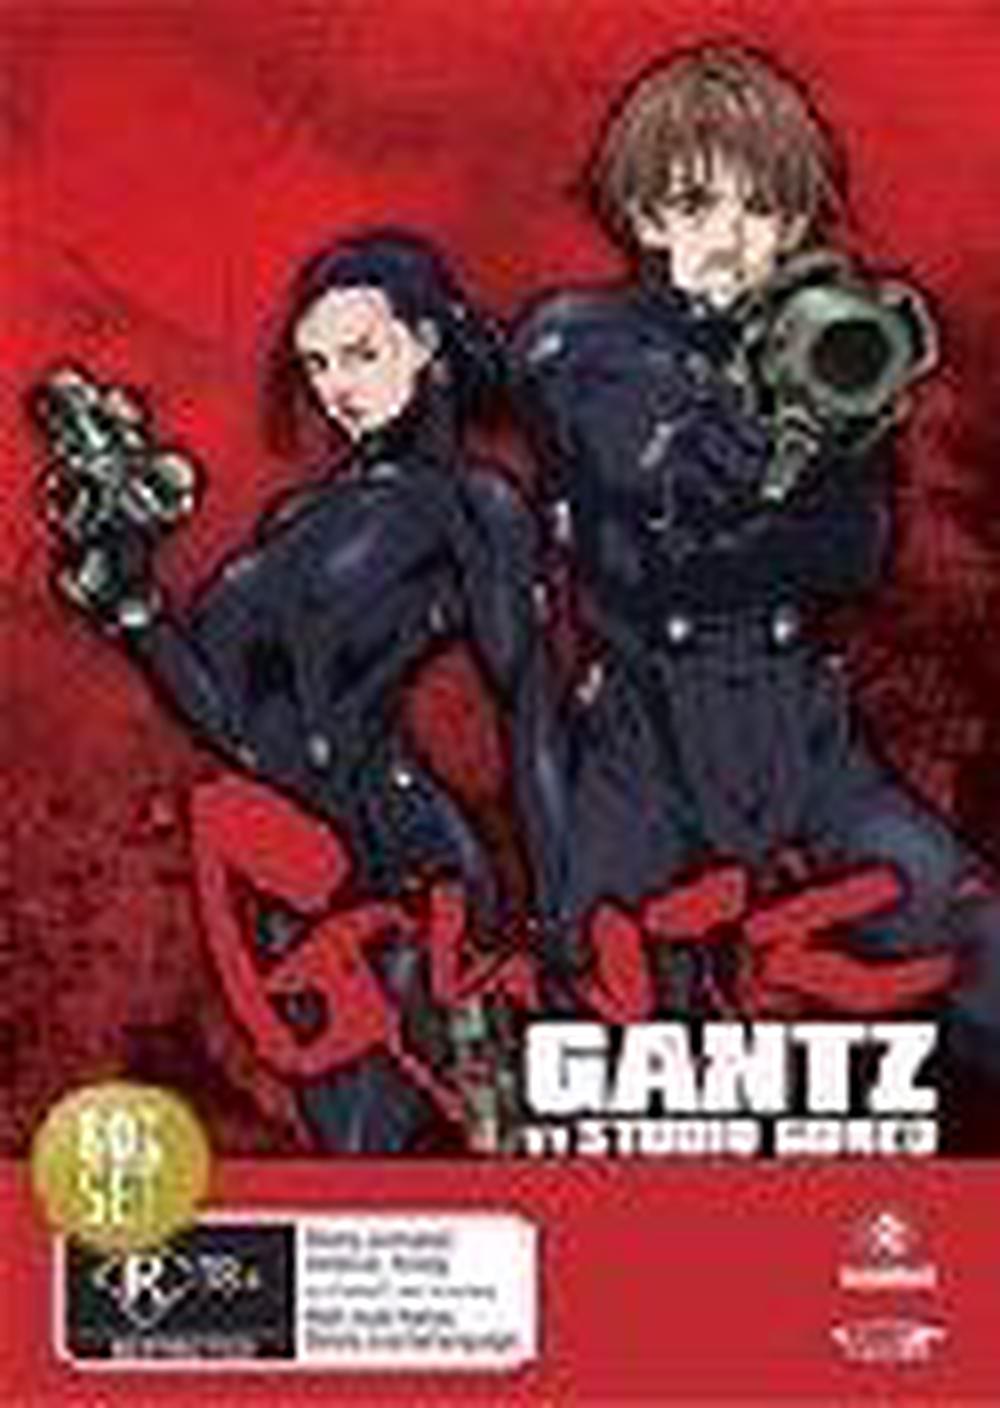 Gantz Complete Collection Dvd Region 4 Free Shipping Ebay